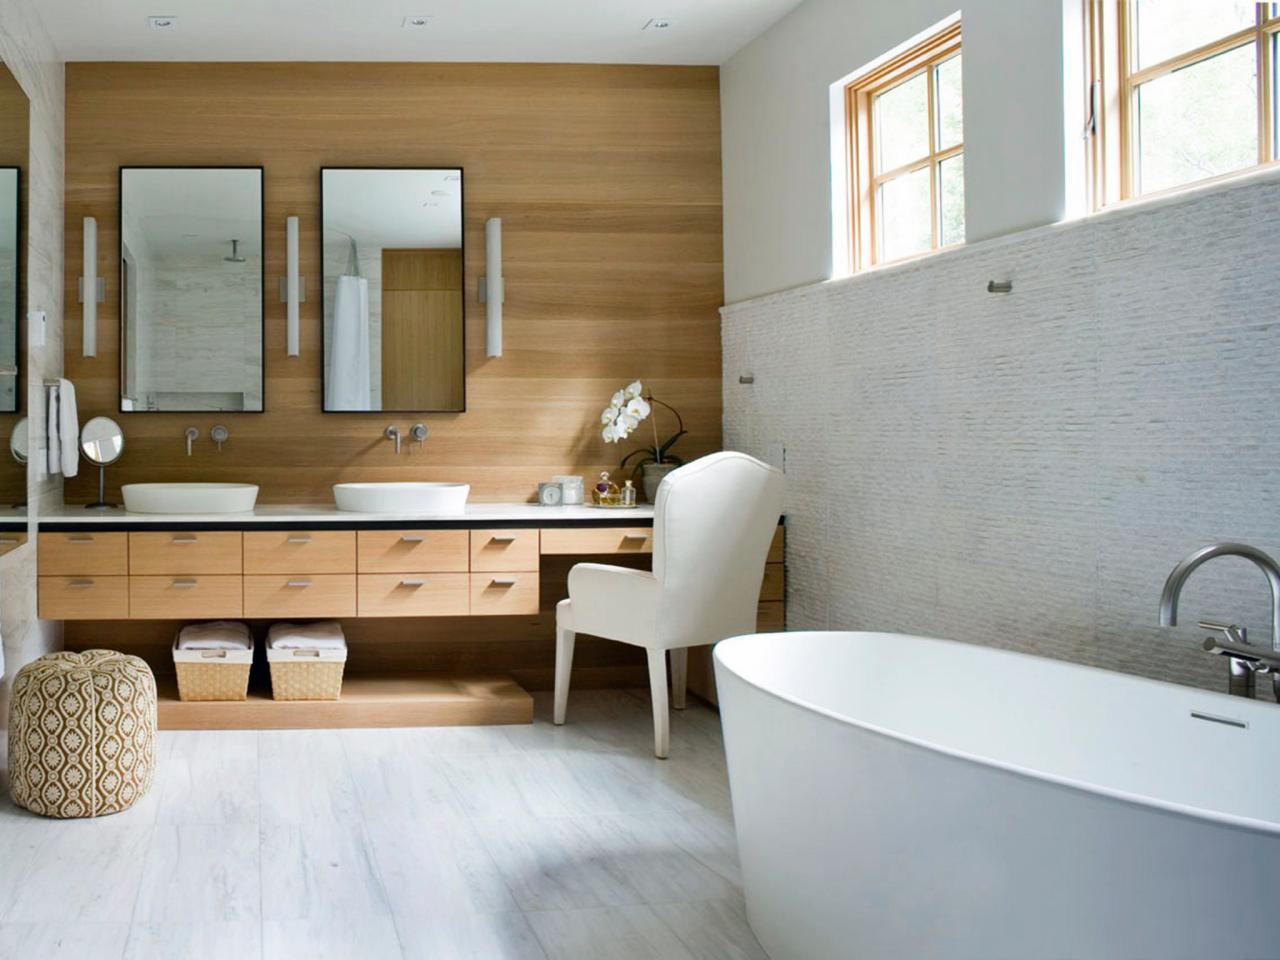 Scotrade DMN Brand New Style Résine Durable Relax Word DECOR salle de bains Décoration